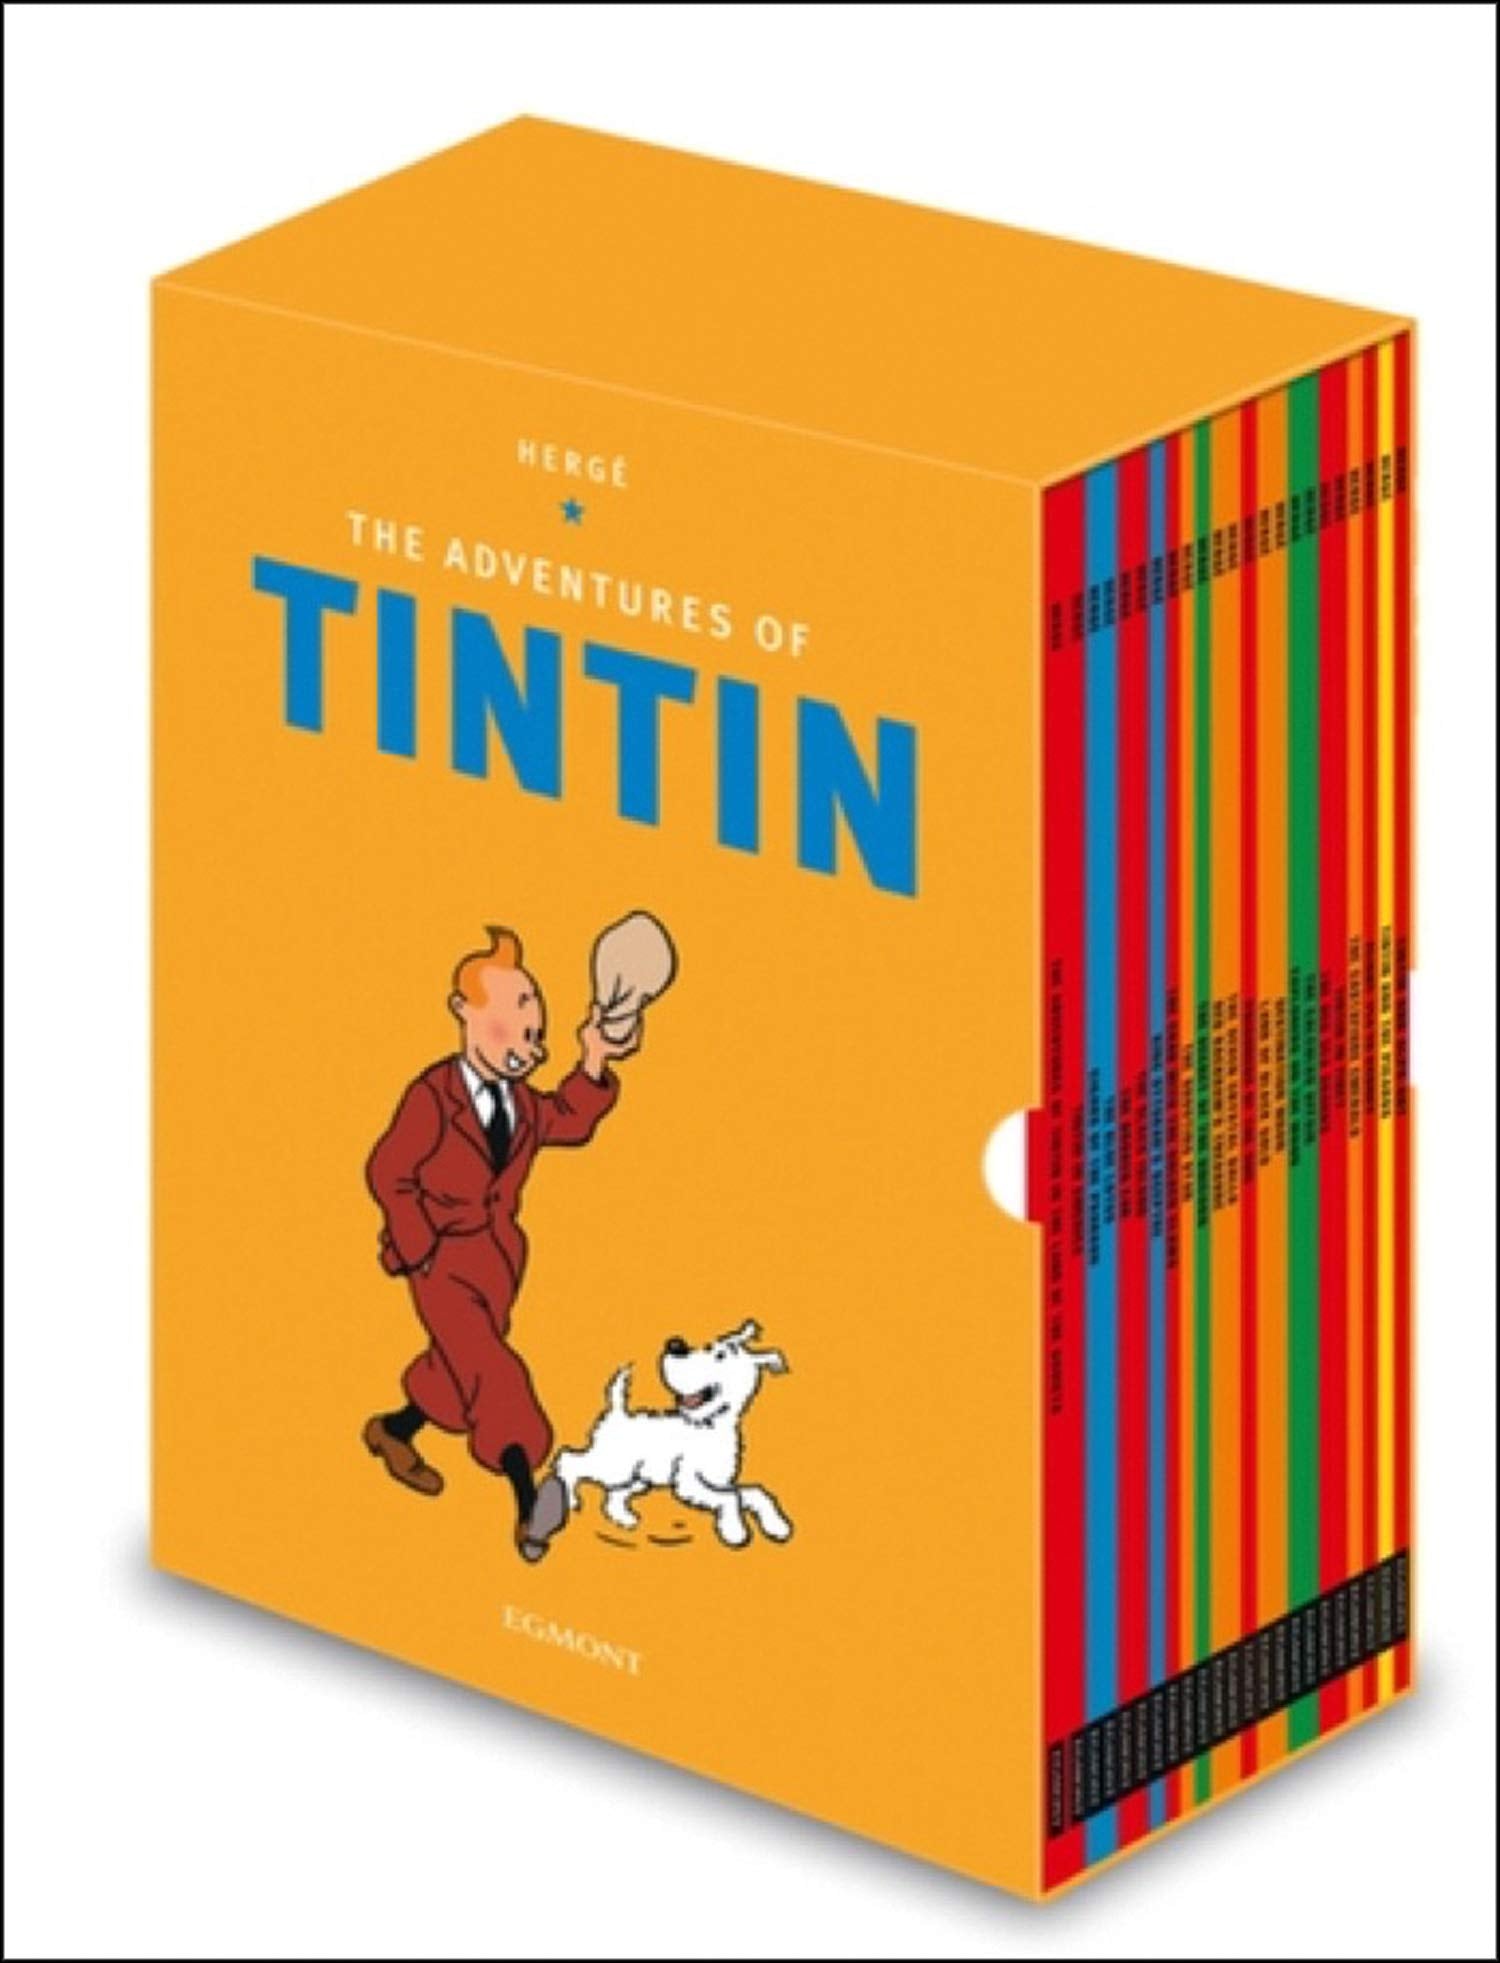 Tintin Paperback Boxed Set 23 titles: Complete Paperback Slipcase (Blue Lotus, Broken Ear) - Lets Buy Books